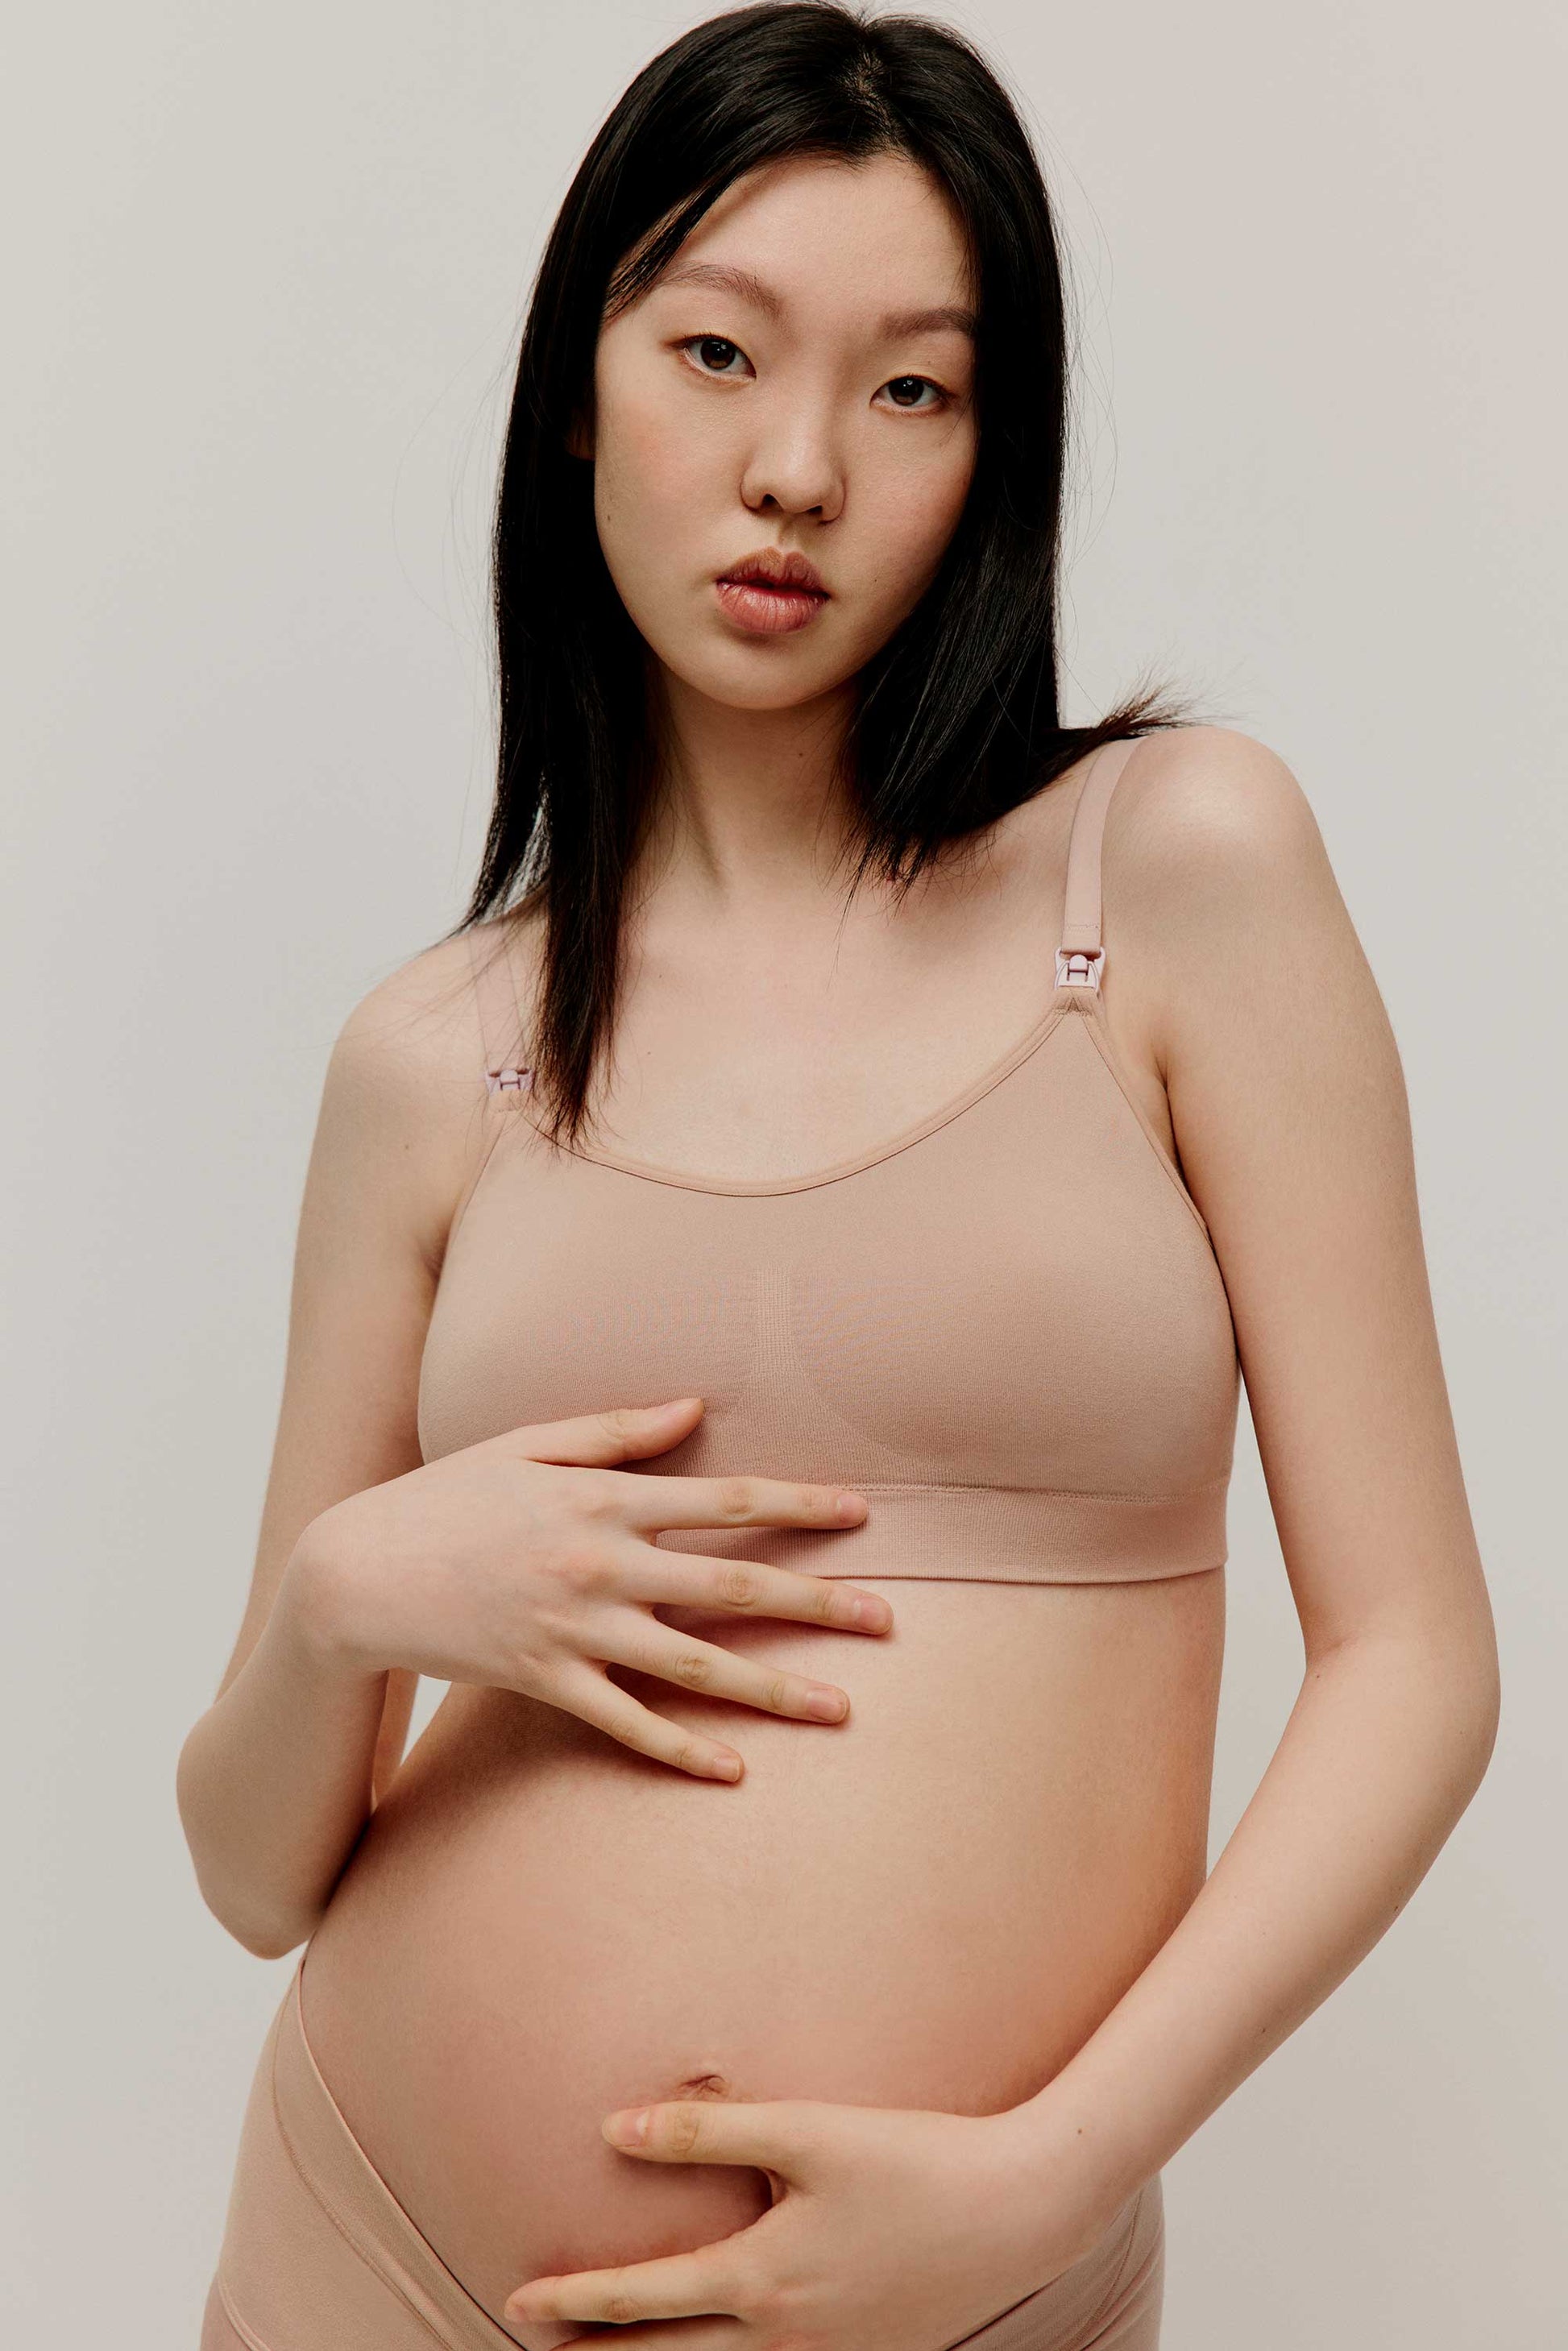 YATEMAO Lace Maternity Nursing Bra For Breastfeeding Comfortable